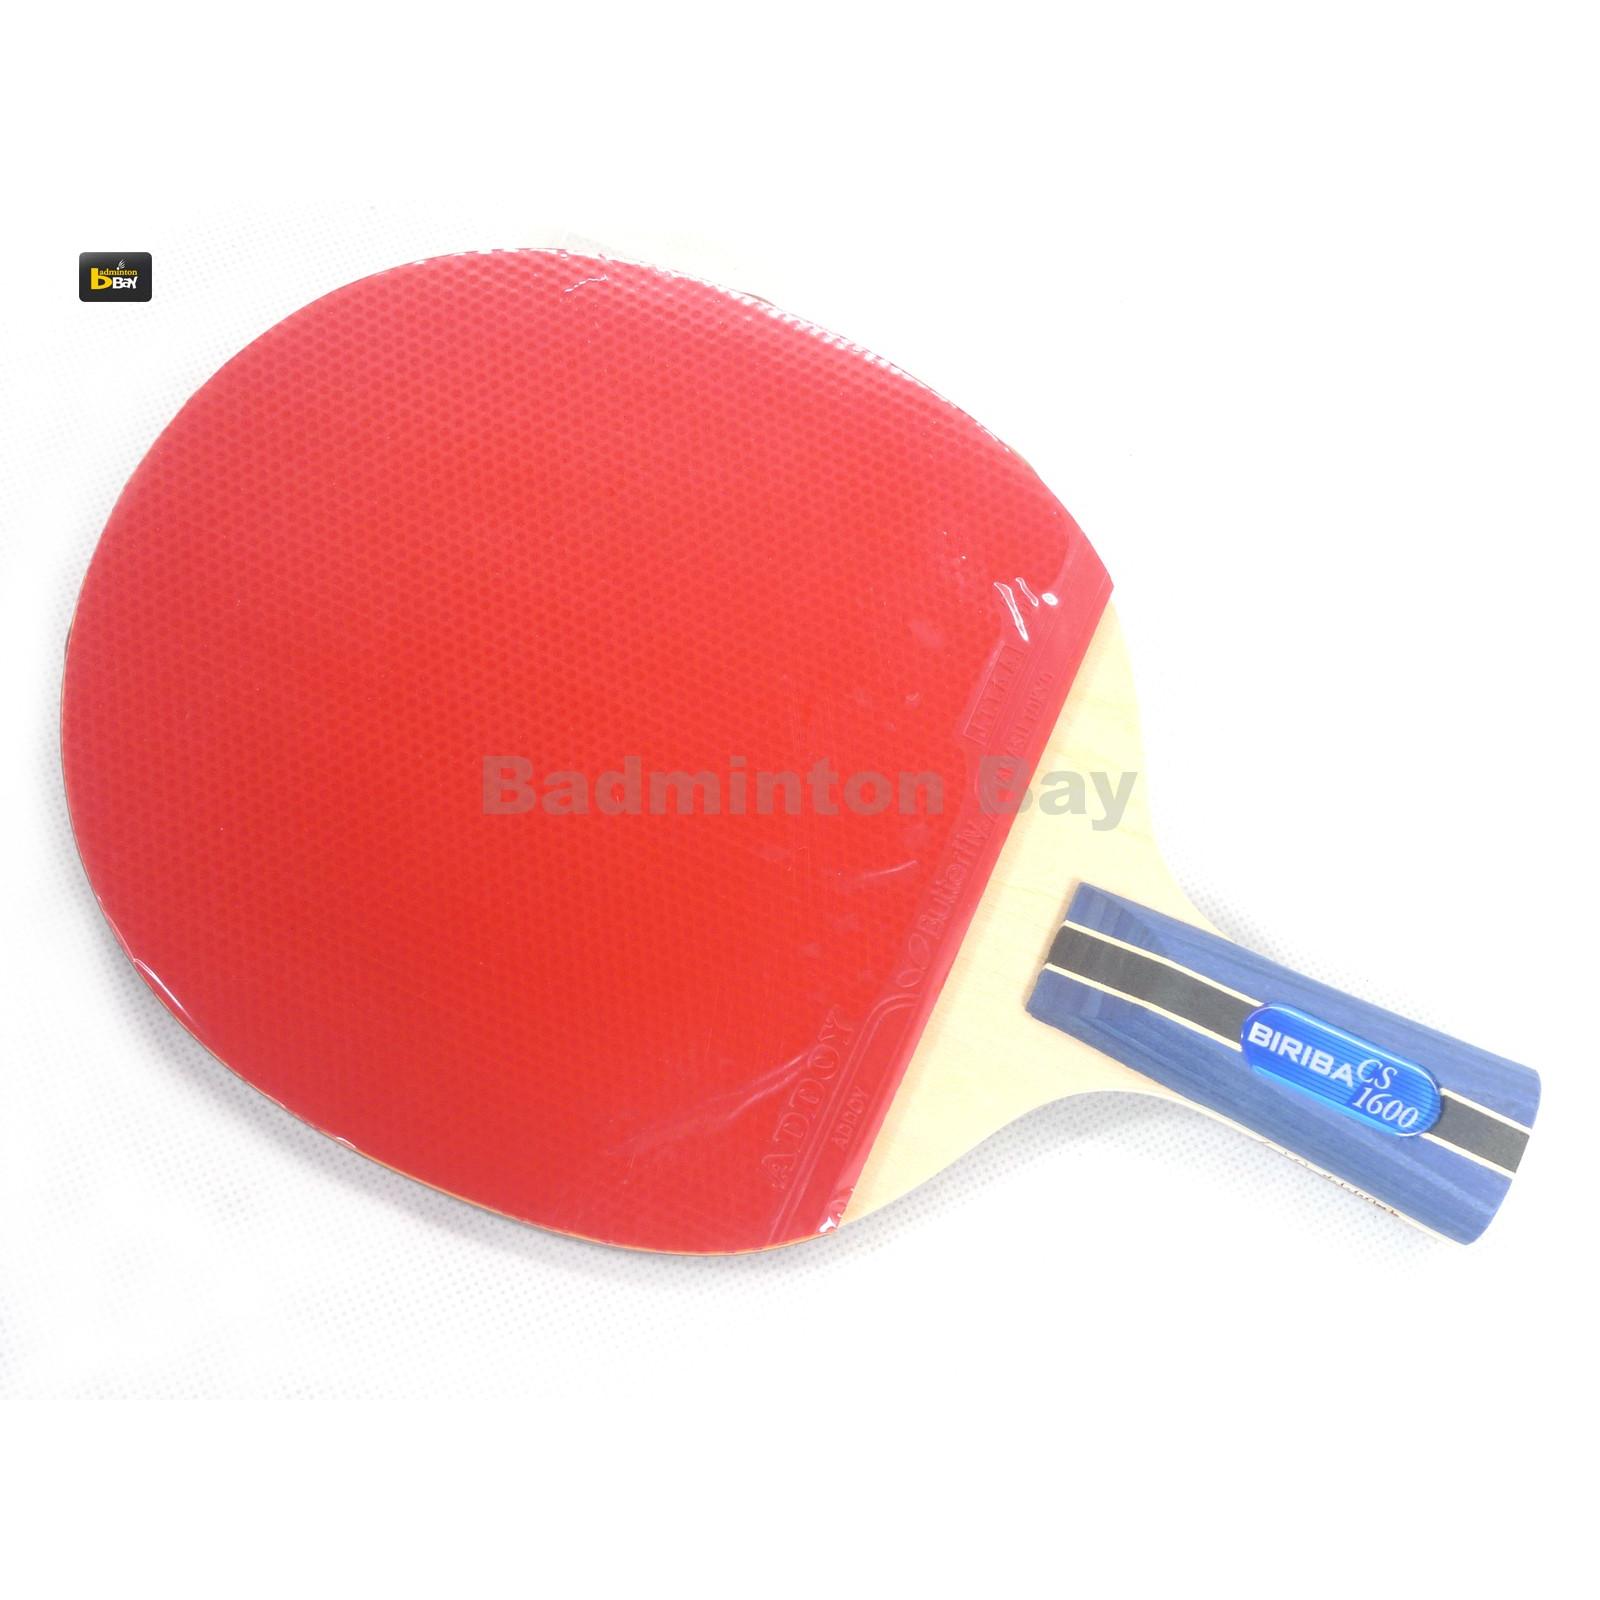 Butterfly BIRIBA II-1 Penhold  Blade,Paddle Table Tennis,Ping Pong Racket Balls 